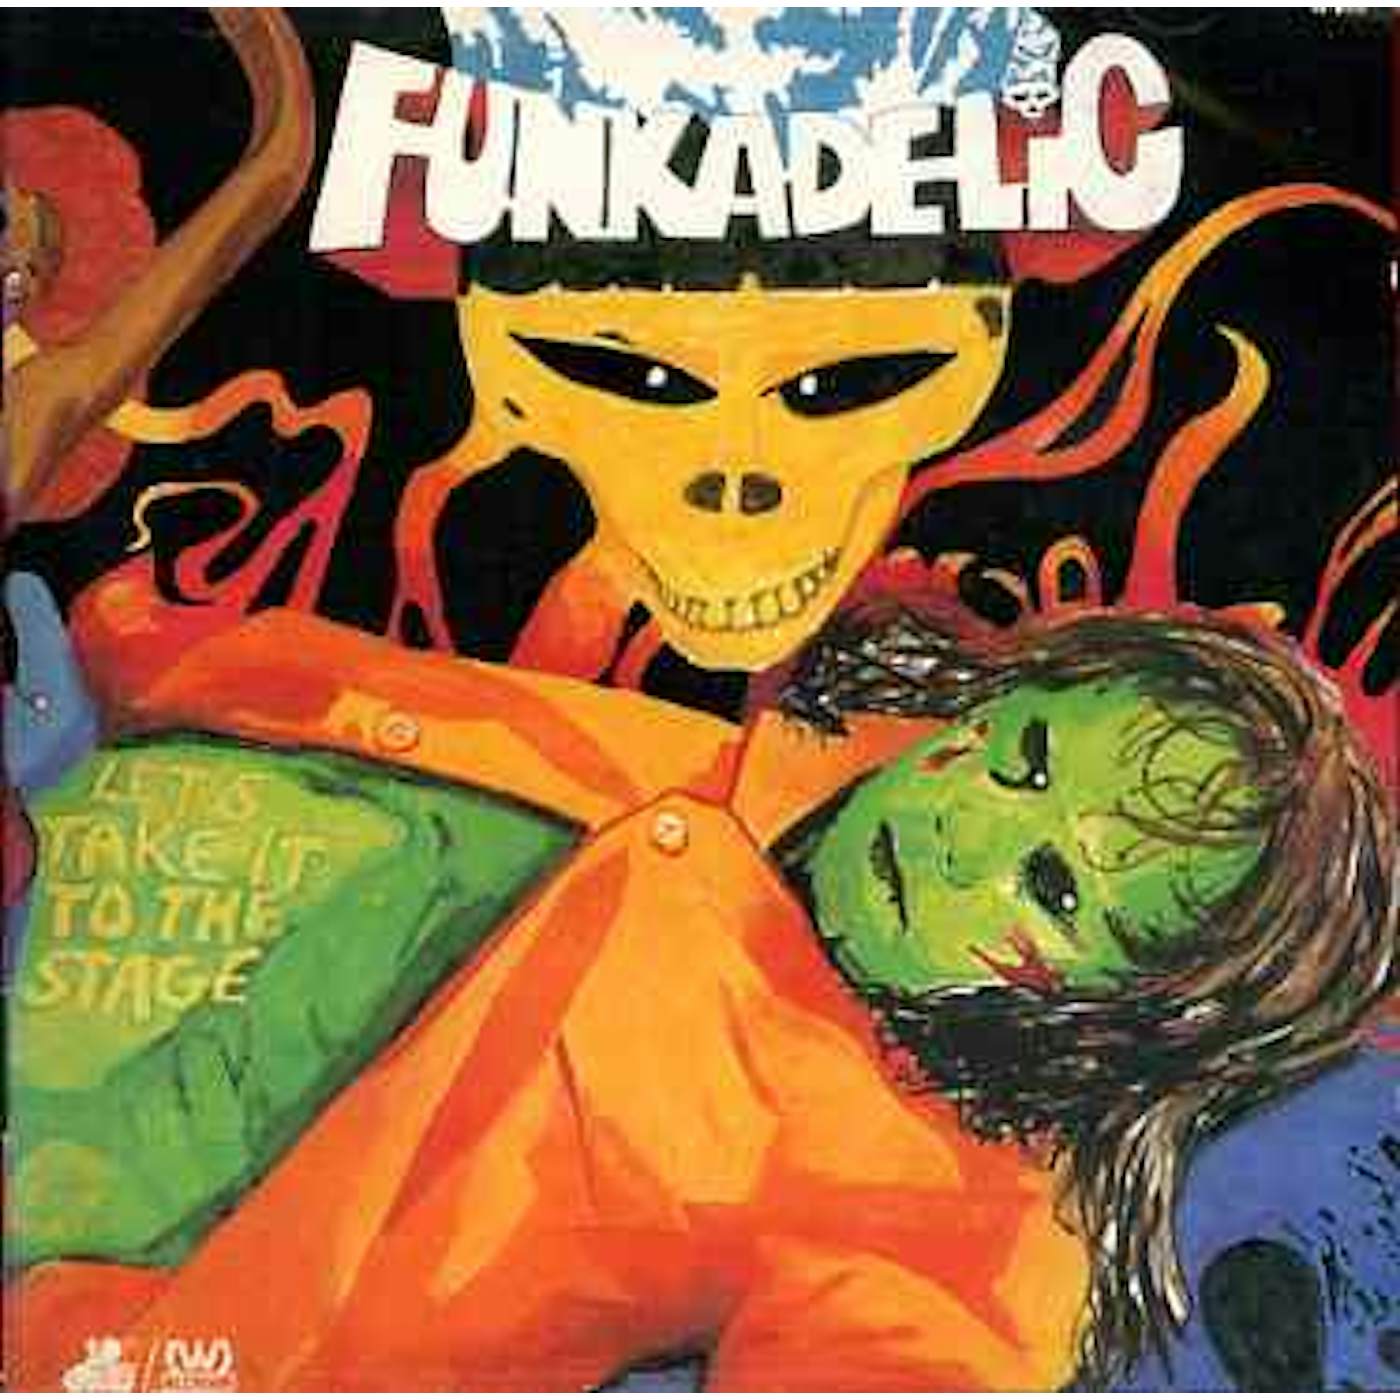 Funkadelic LET'S TAKE IT TO STAGE CD